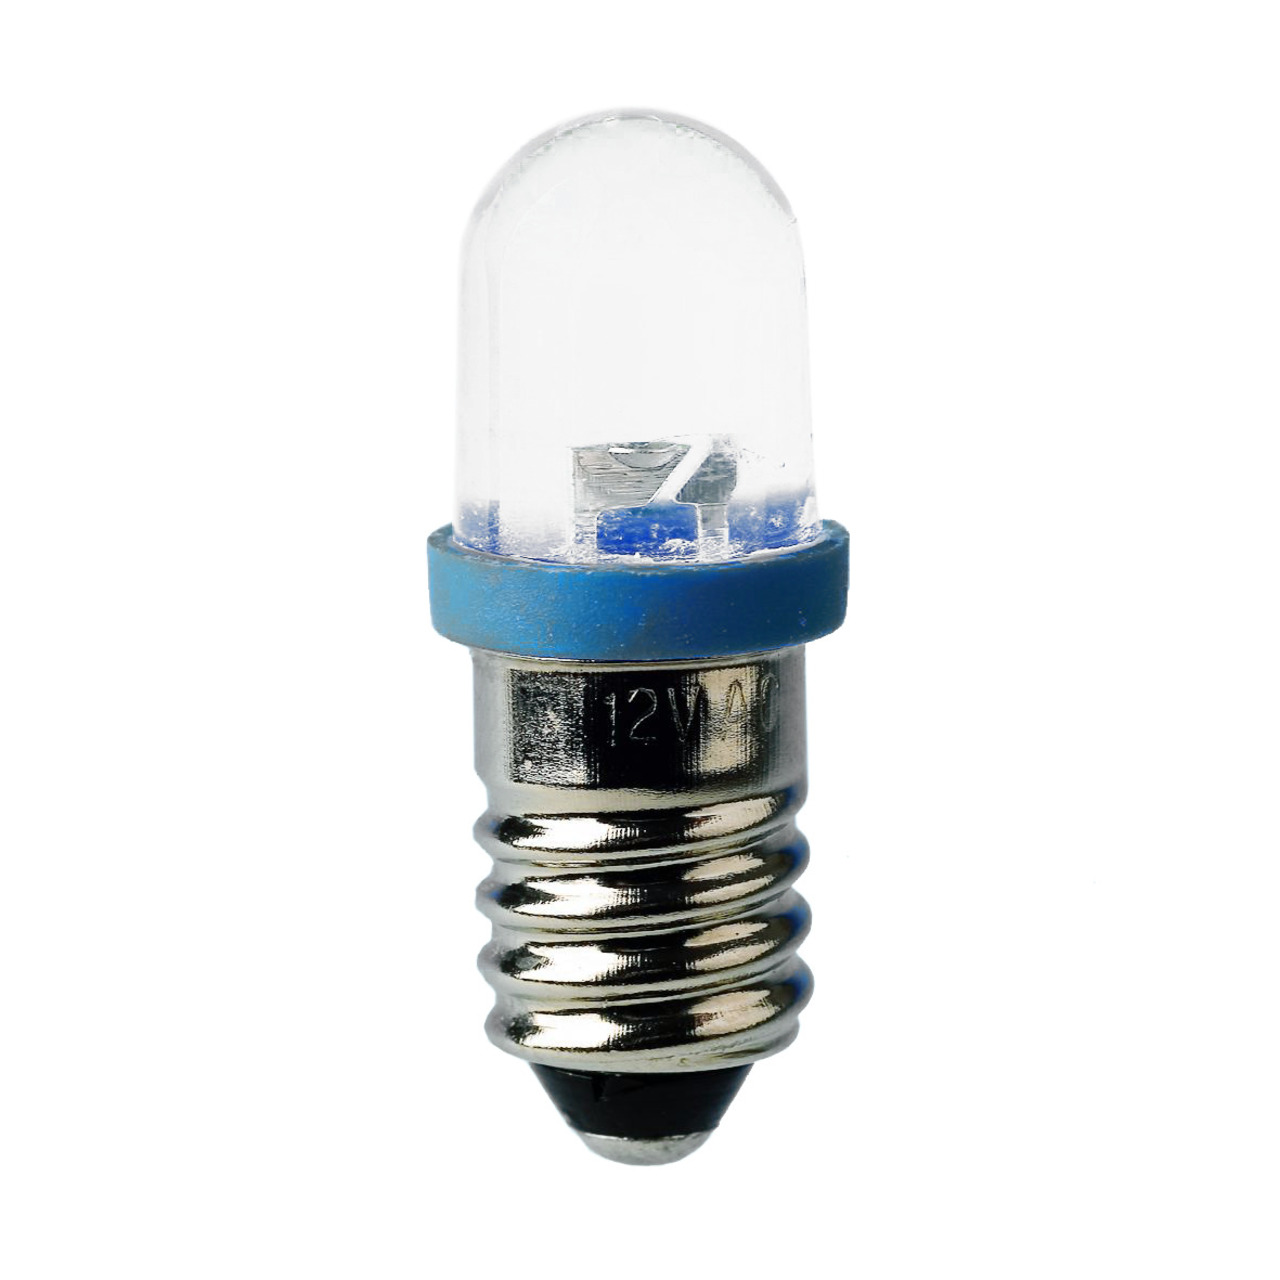 Barthelme LED-Lampe E10 mit Brückengleichrichter- 10 x 28 mm- 230 V- warmweiss